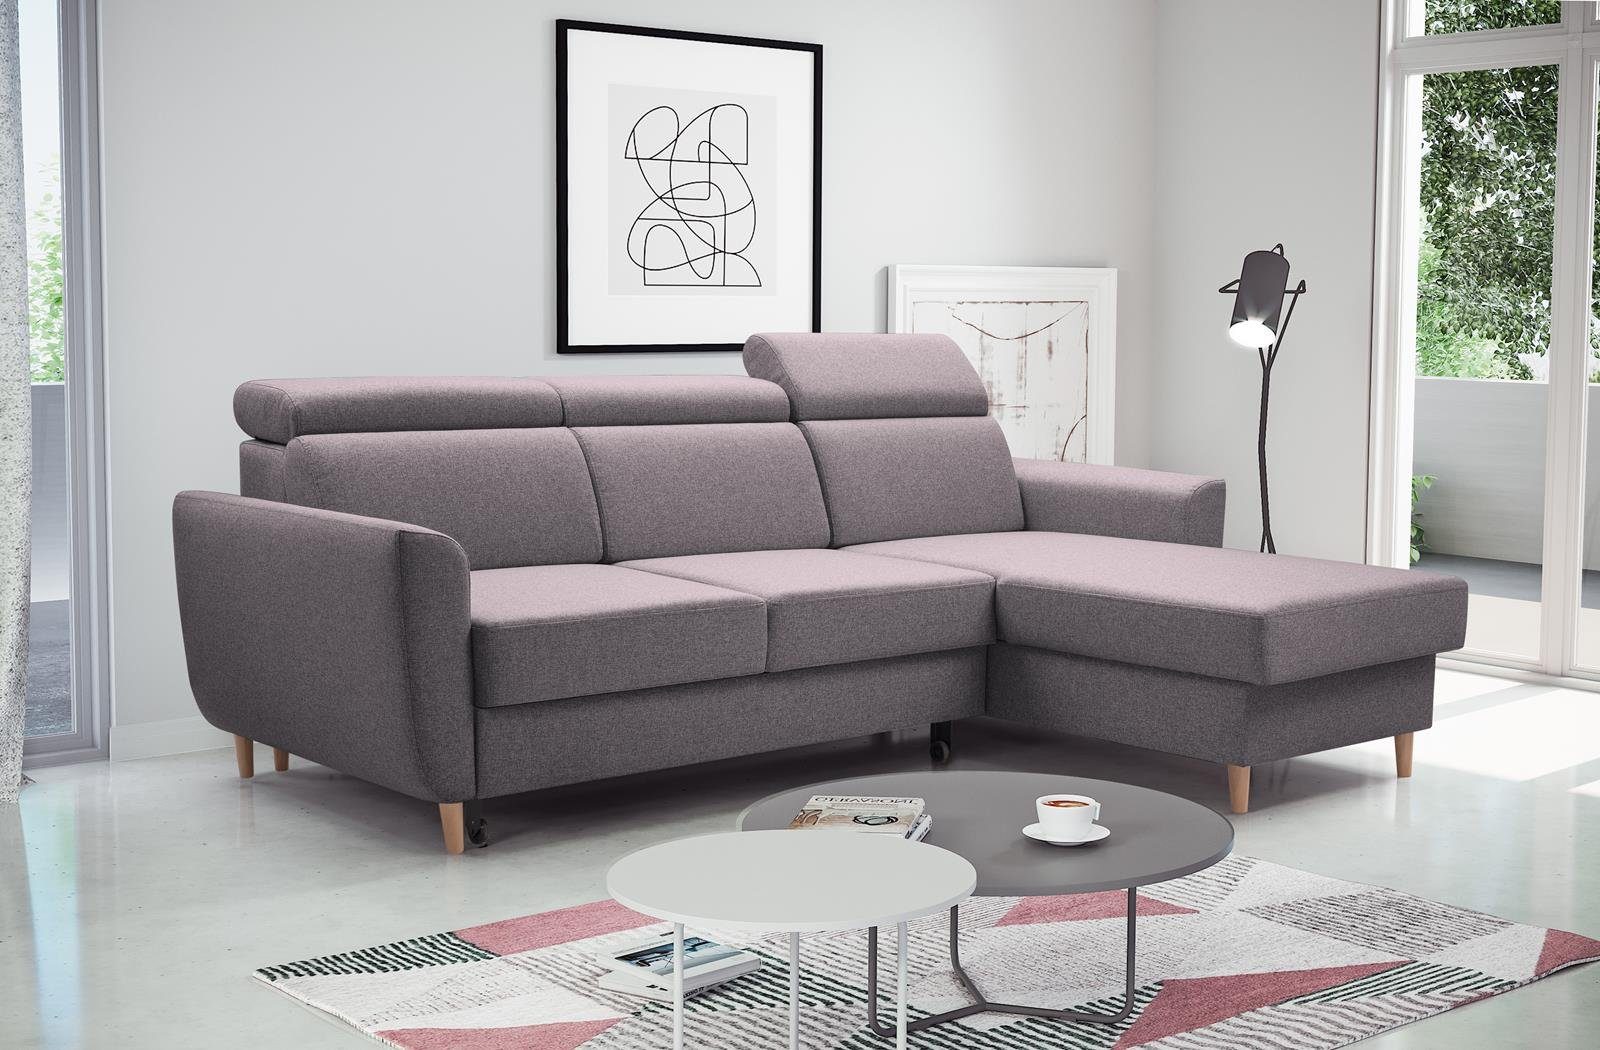 Beautysofa Ecksofa Modern Ecksofa GUSTAW Sofa Couch mit Schlaffunktion universelle dunkelgrau